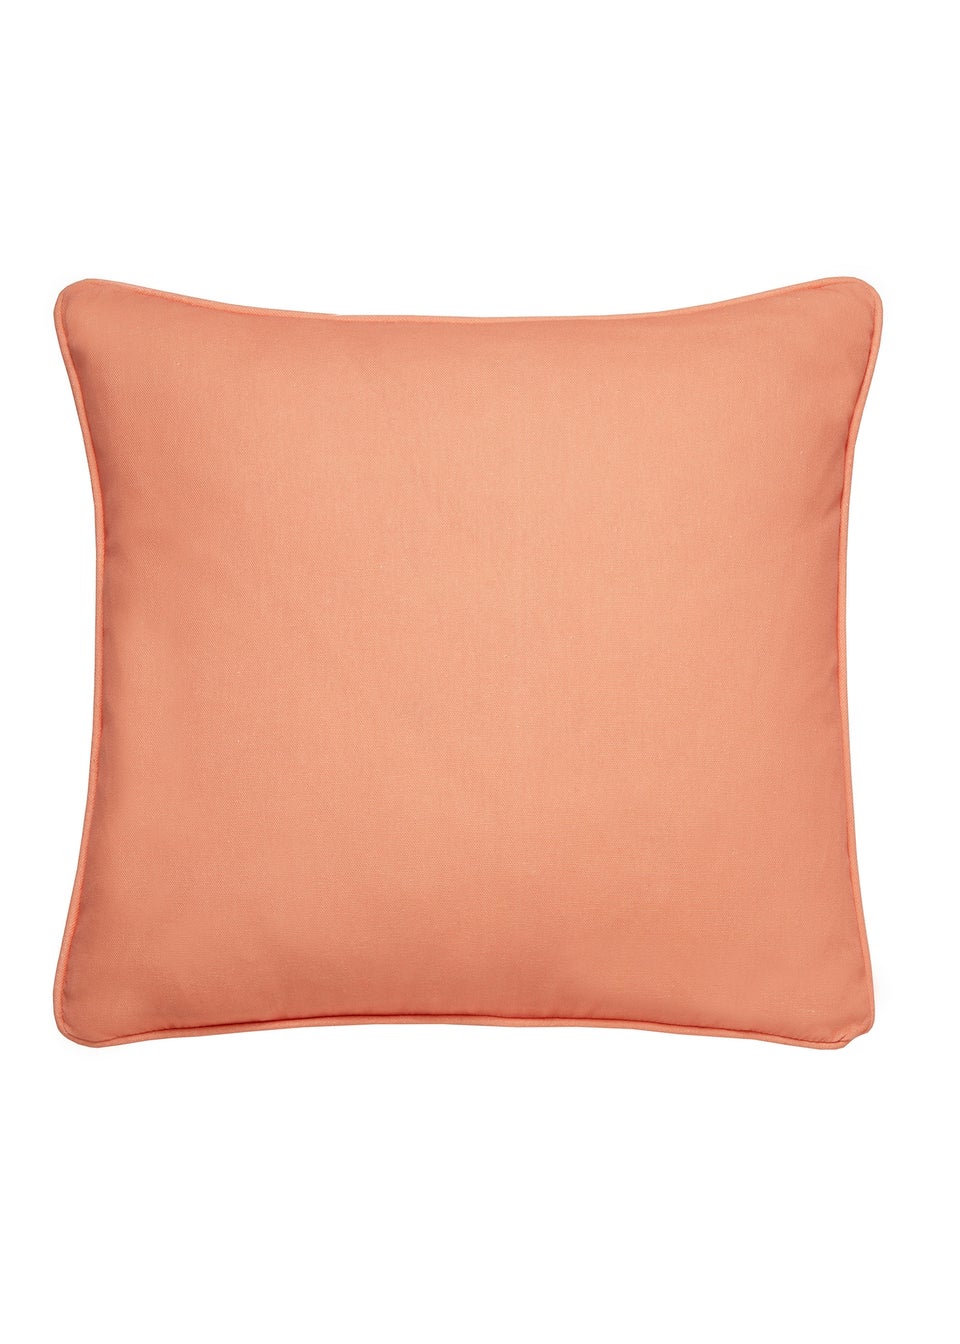 Fusion Plain Dye Filled Outdoor 
Cushion